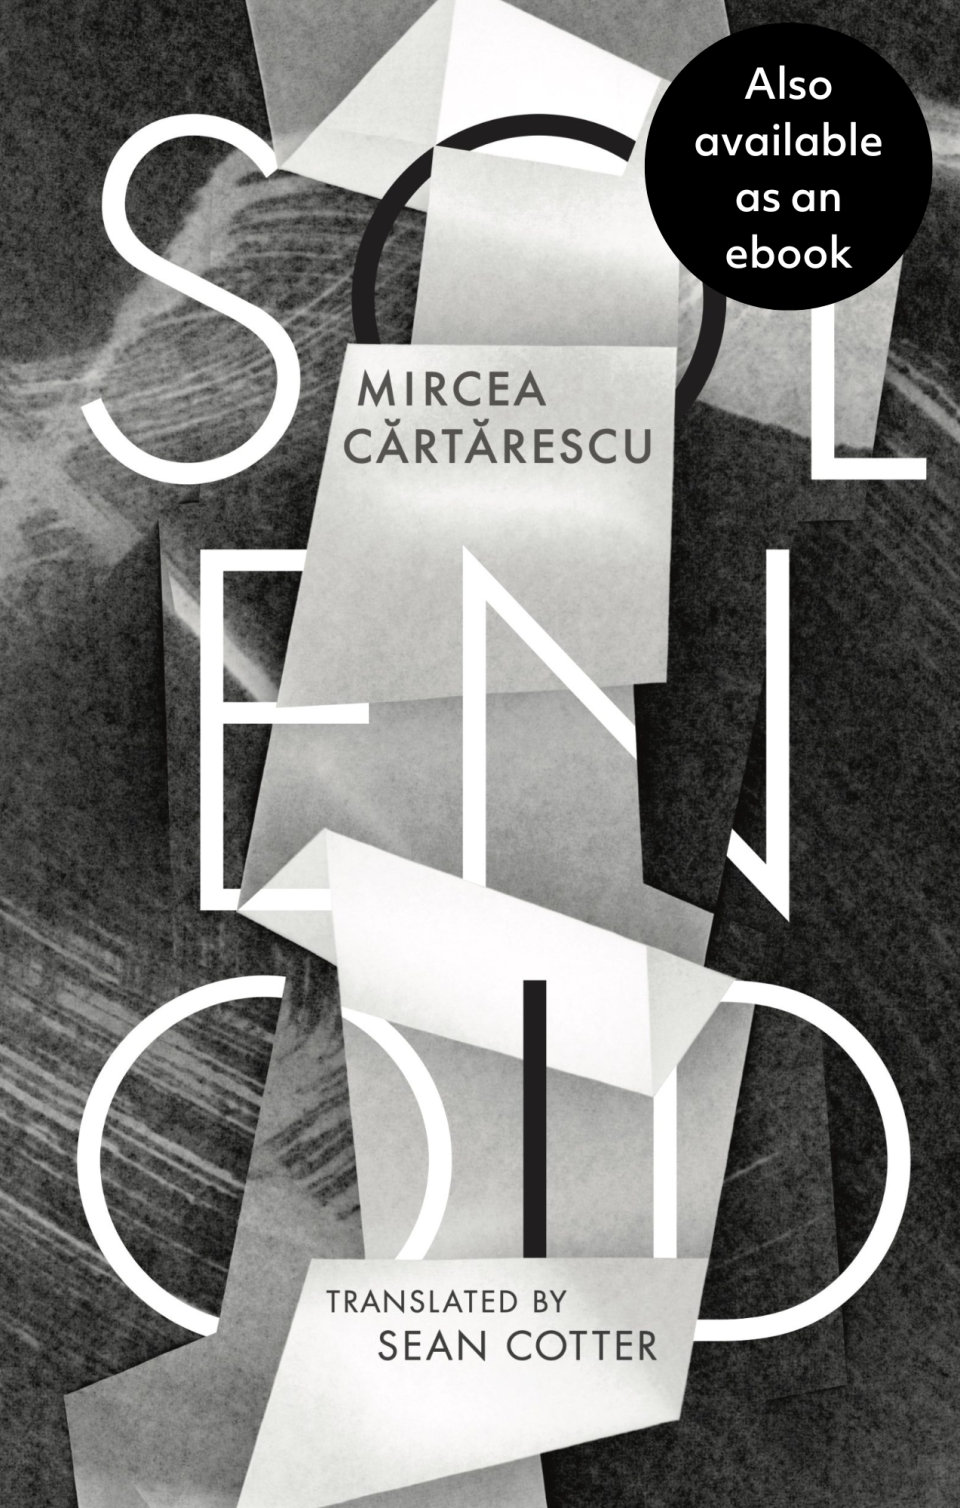 Shows the cover of Solenoid by Mircea Cărtărescu